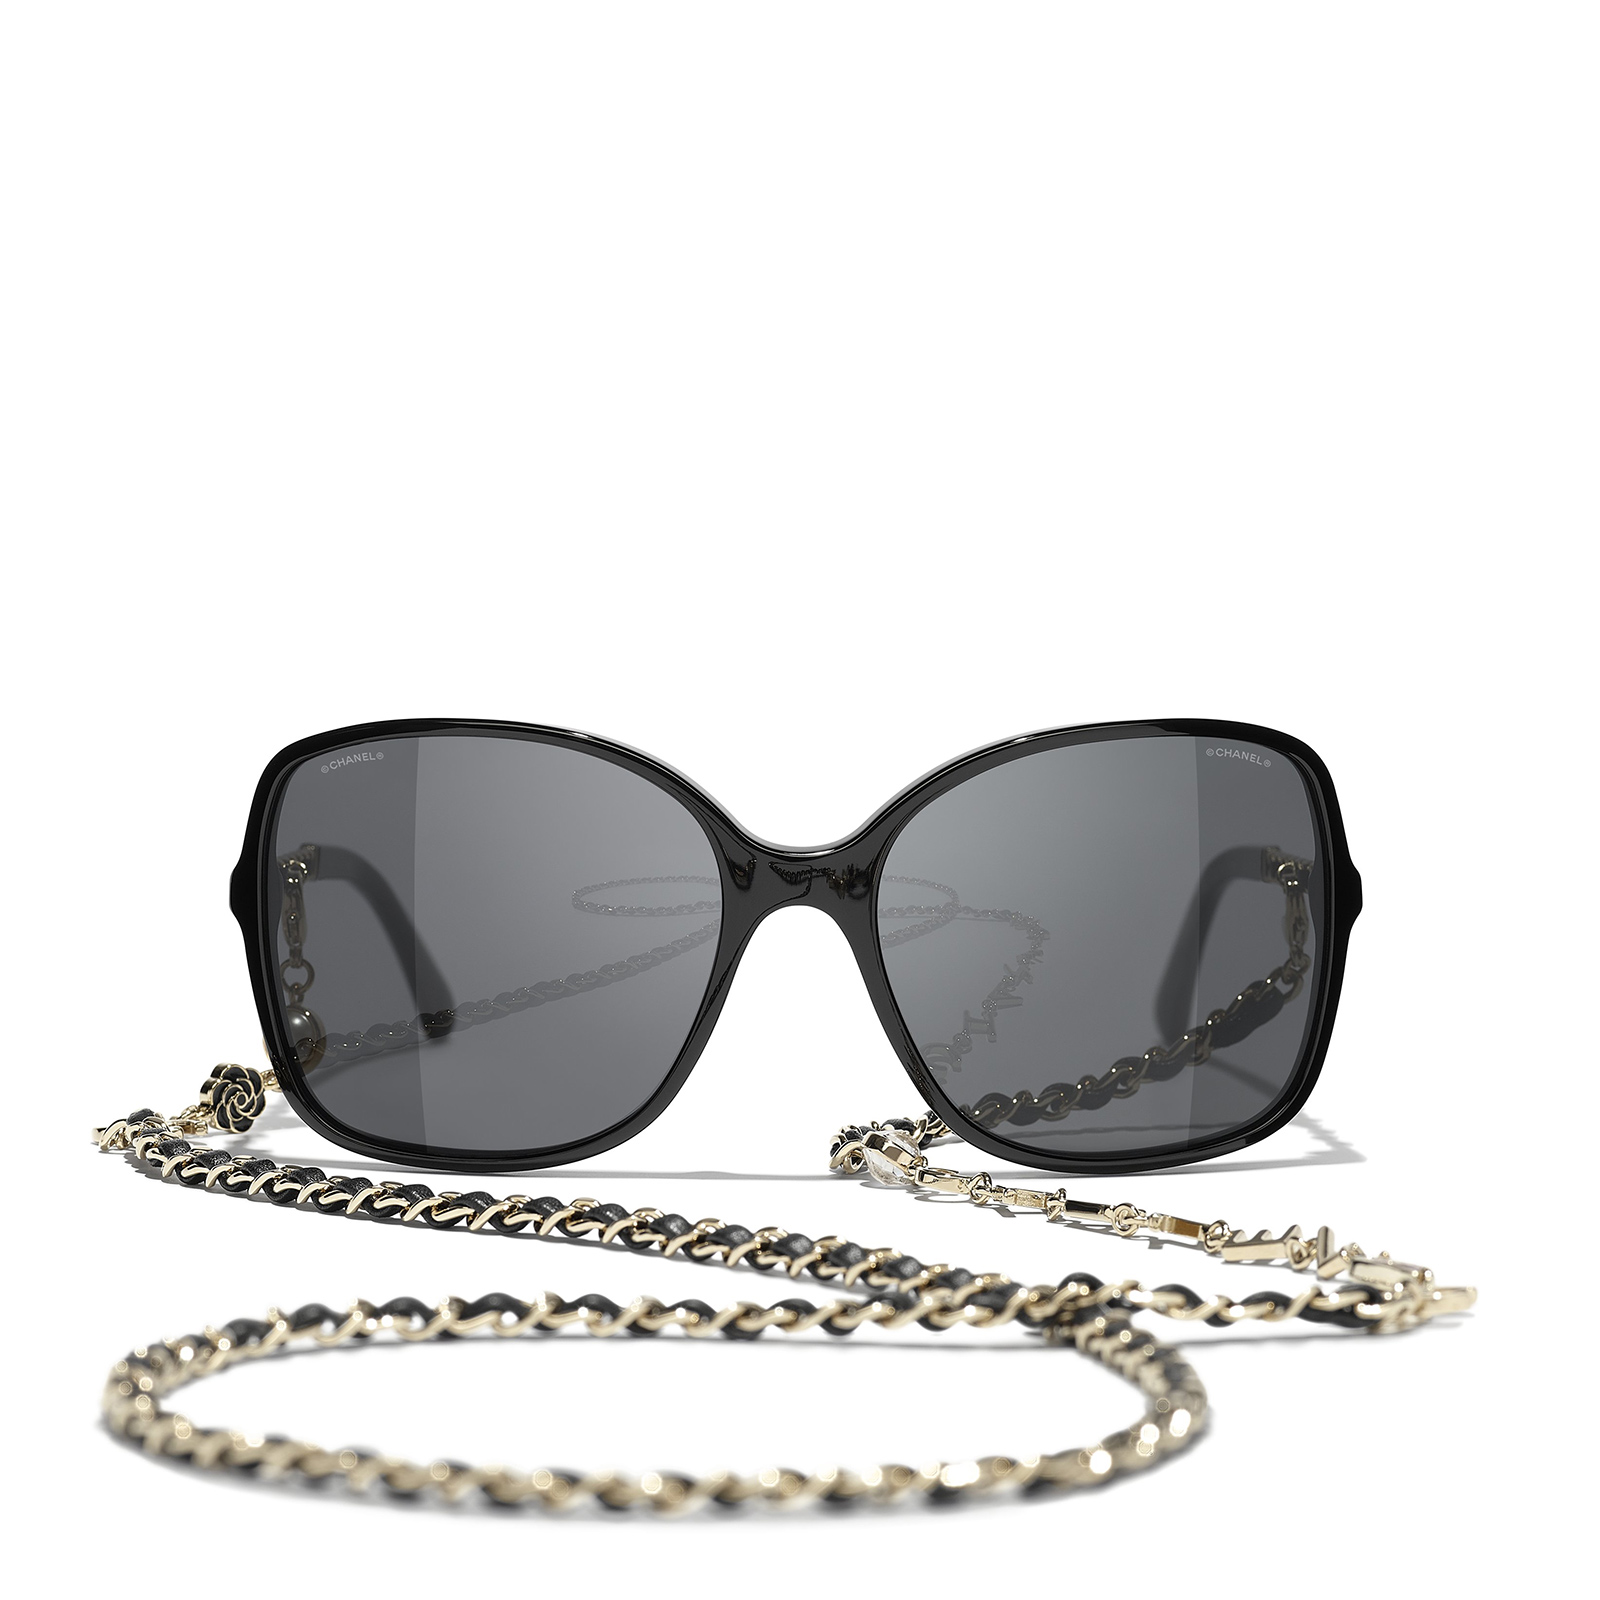 CHANEL square Sunglasses C622S4 Black & Gold - front view